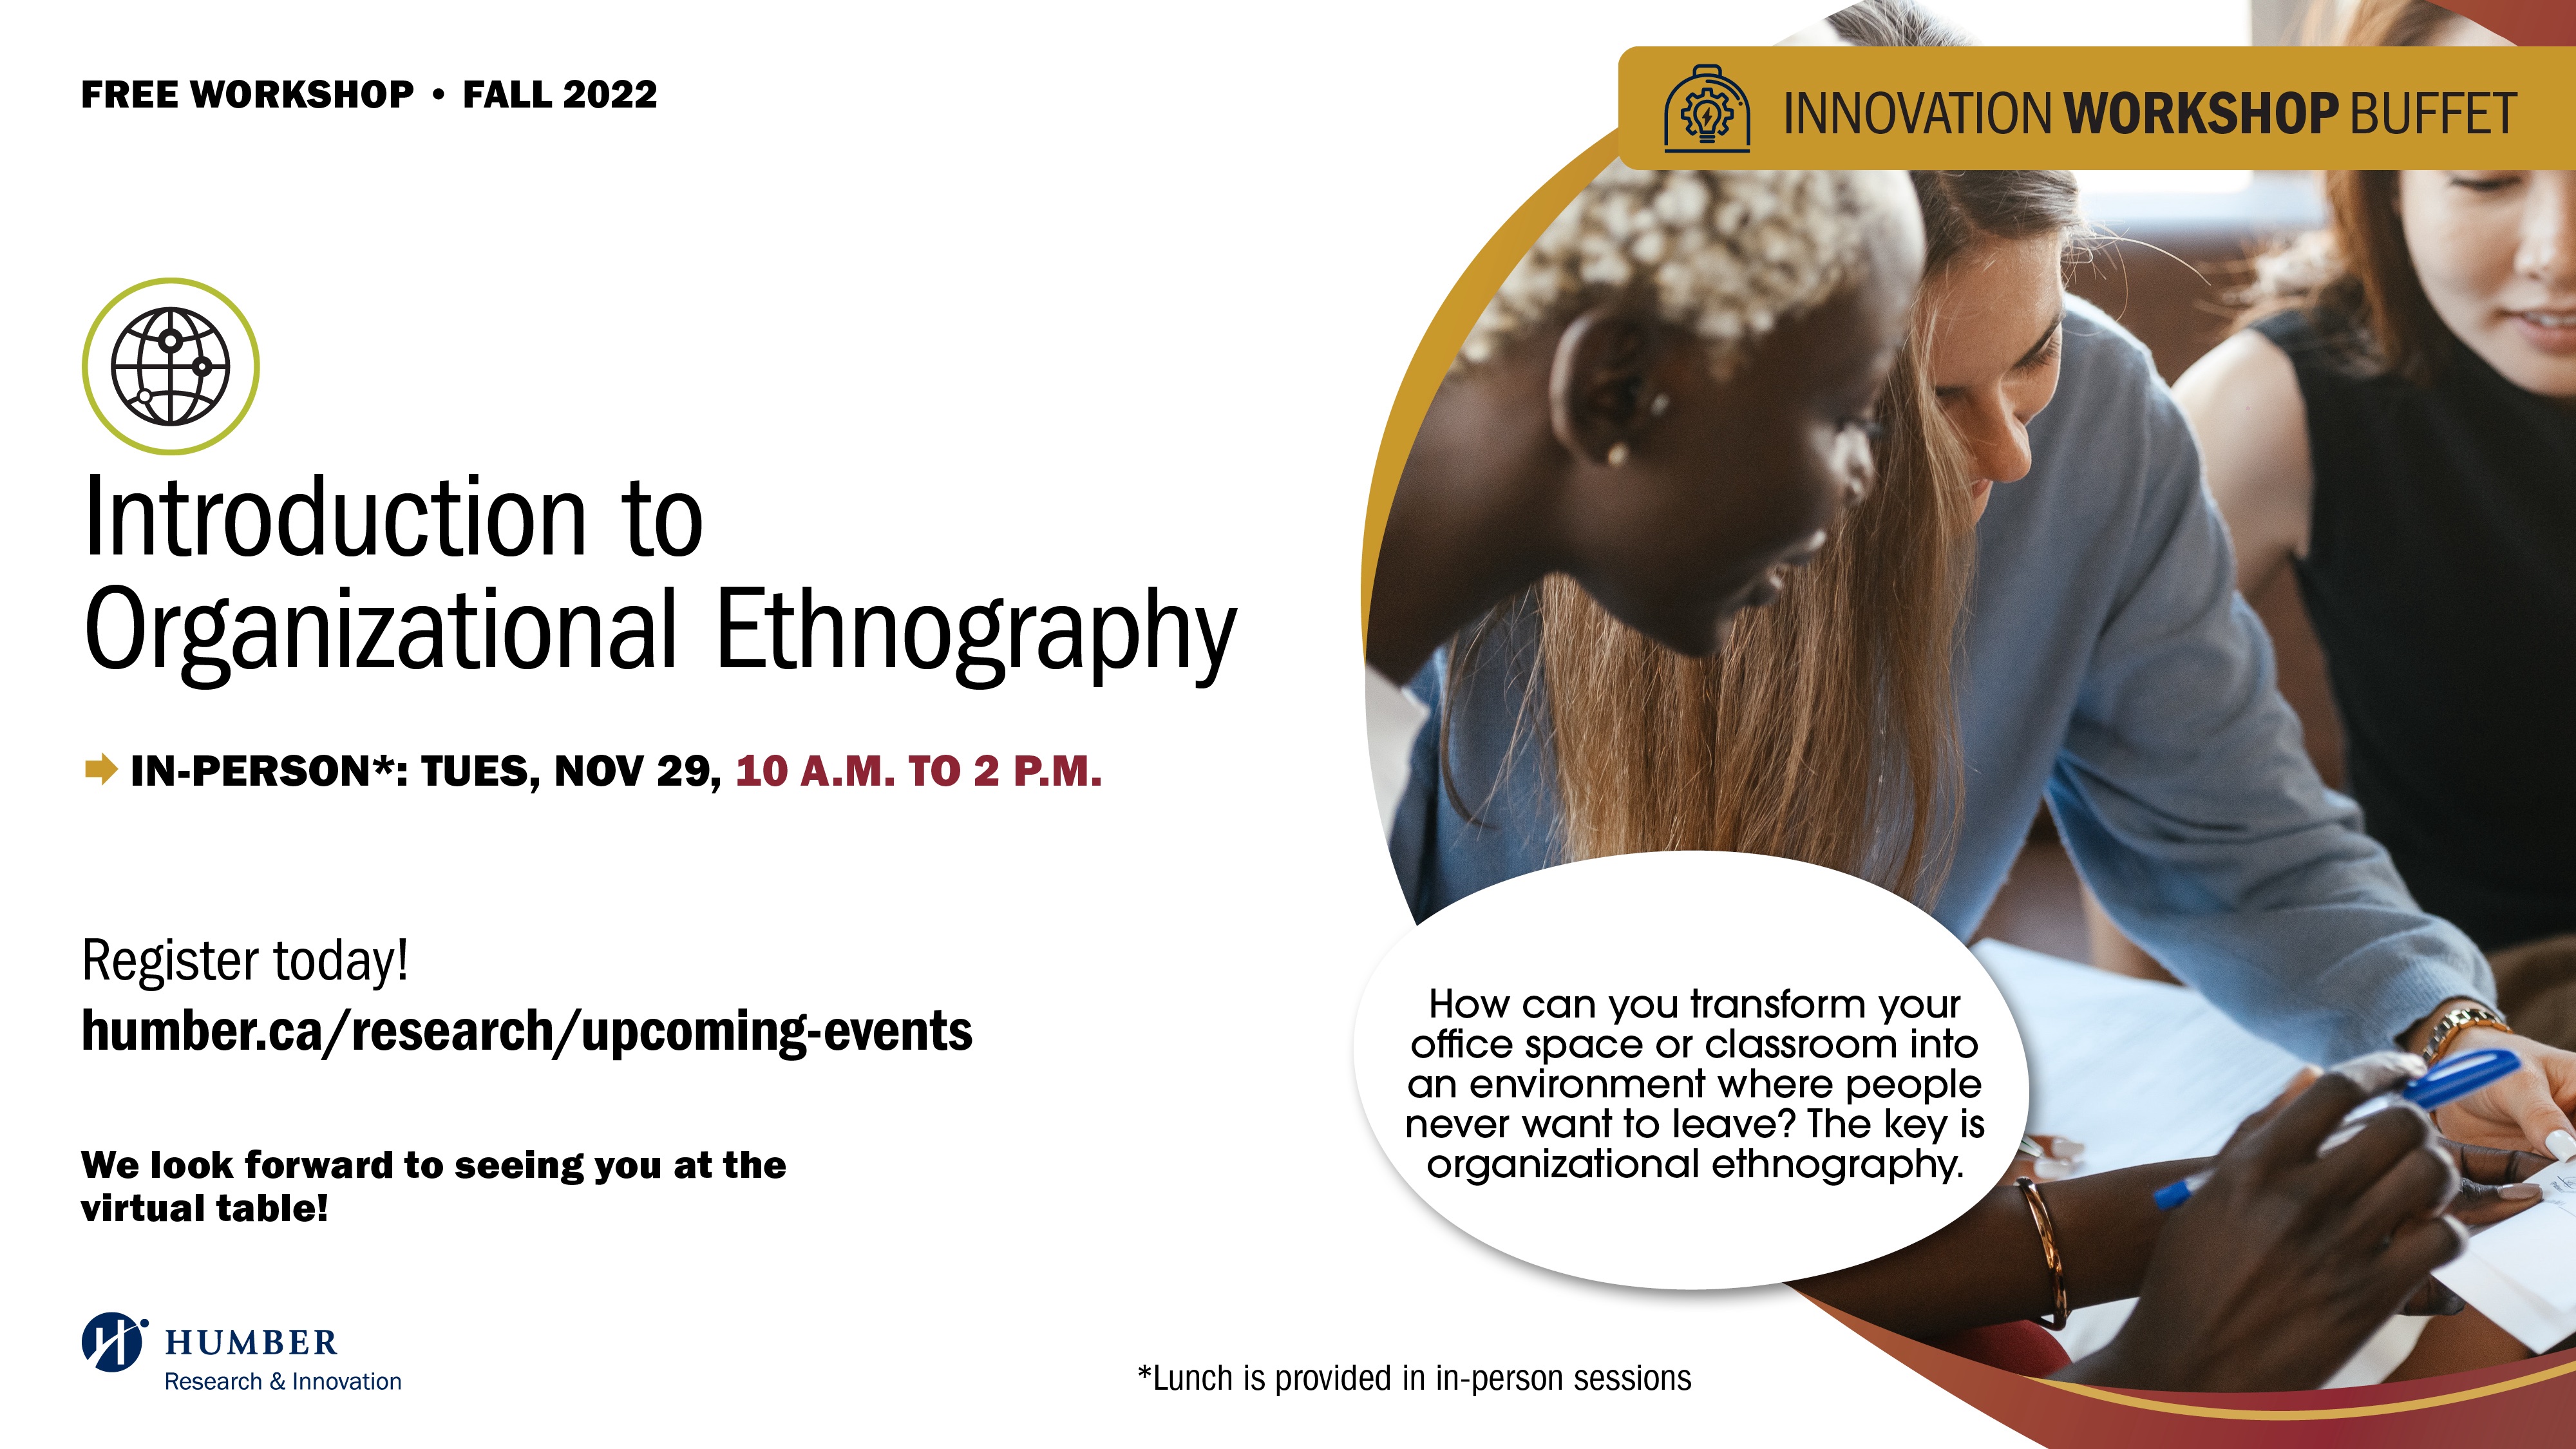 Introduction to Organizational Ethnography Workshop